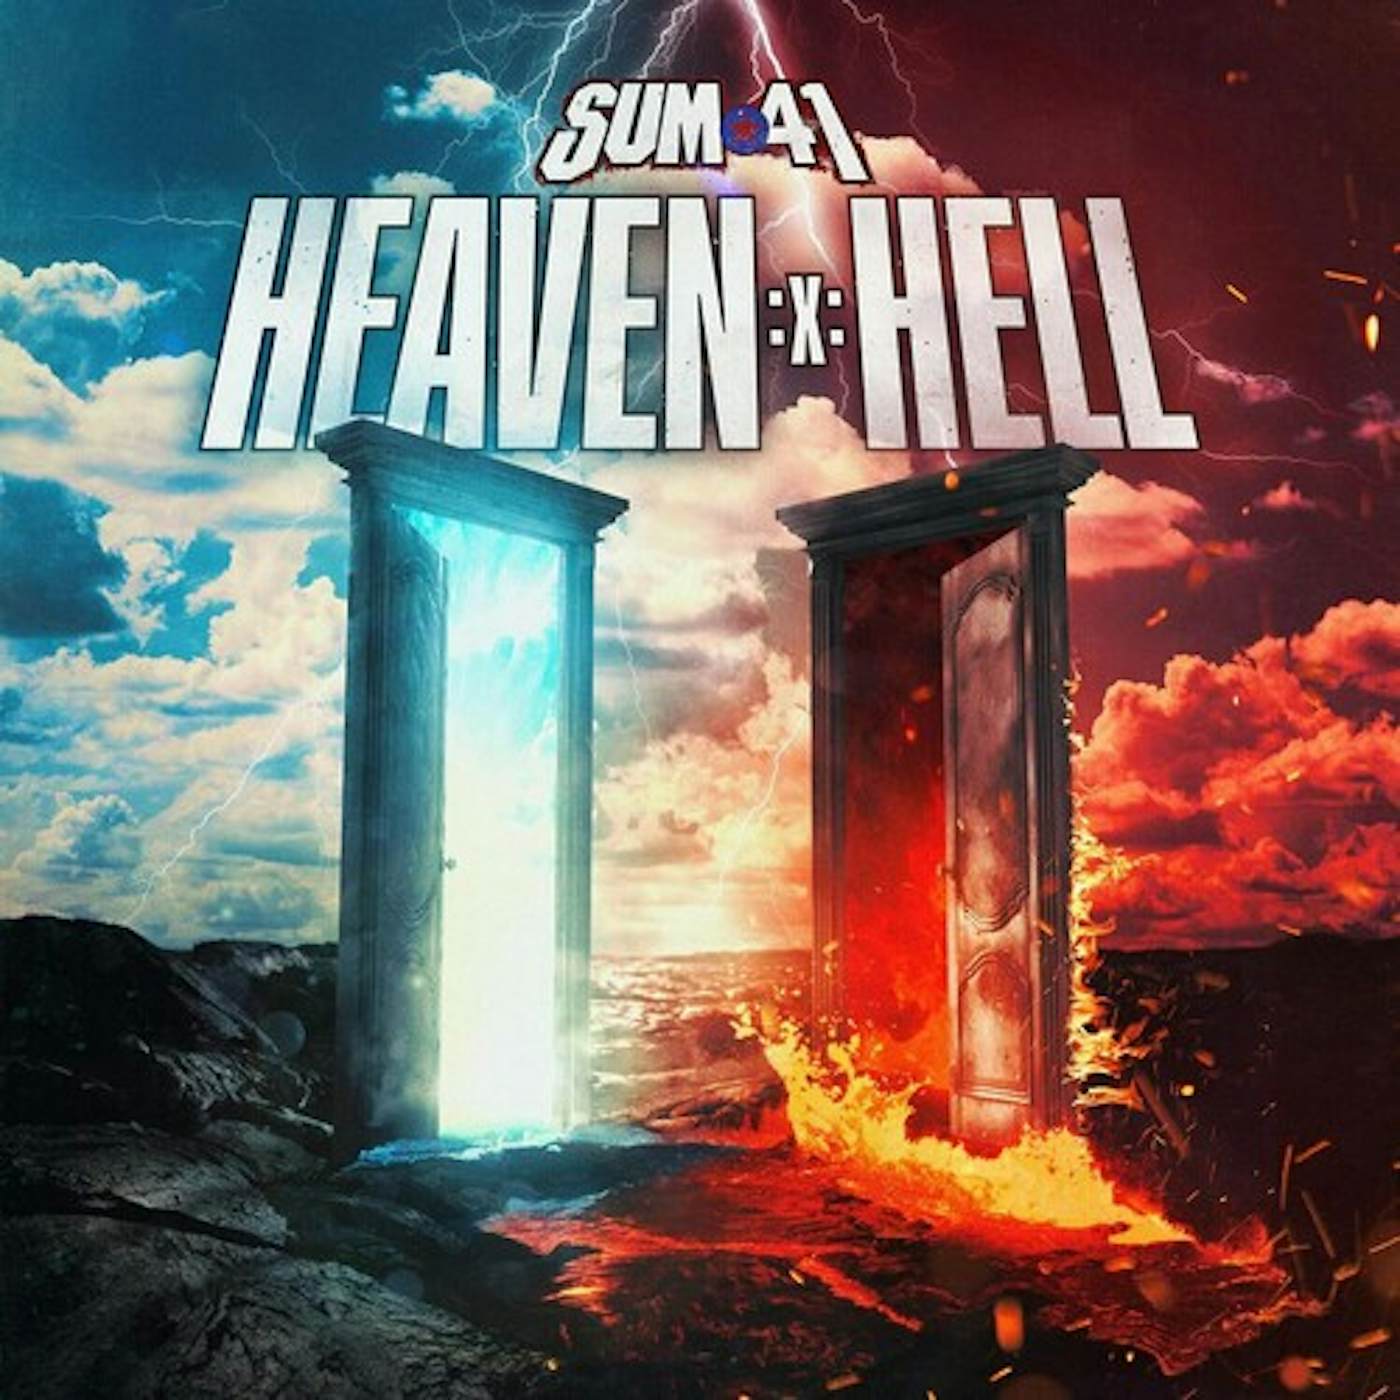 Sum 41 HEAVEN :X: HELL CD